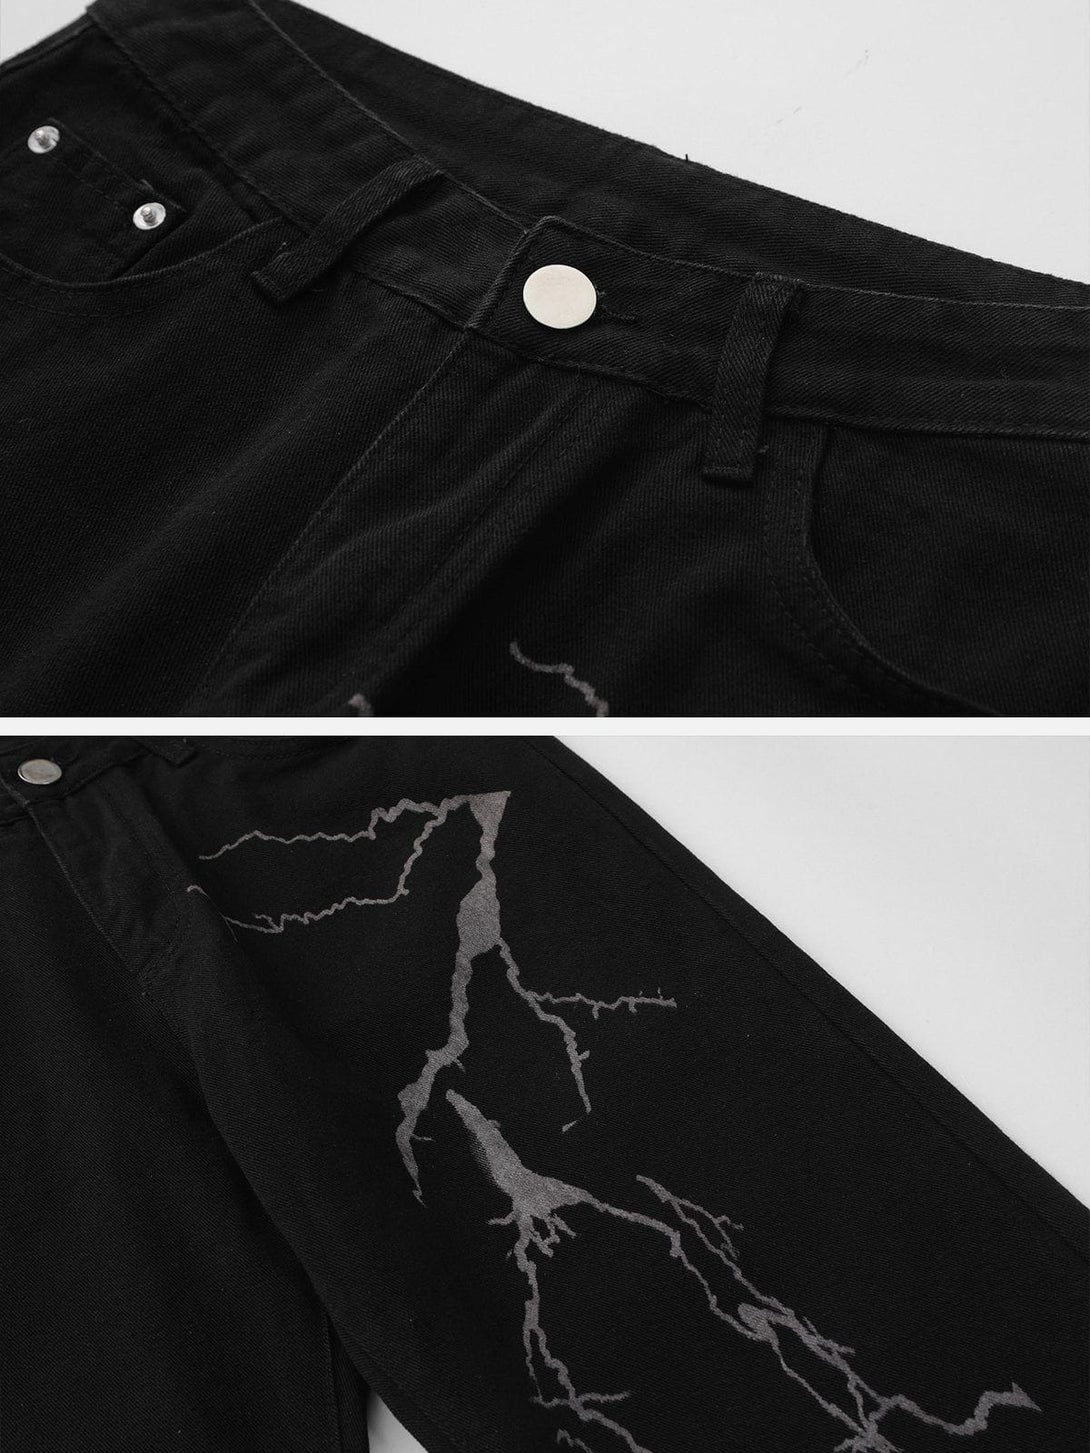 Levefly - Vintage Lightning Print Jeans - Streetwear Fashion - levefly.com